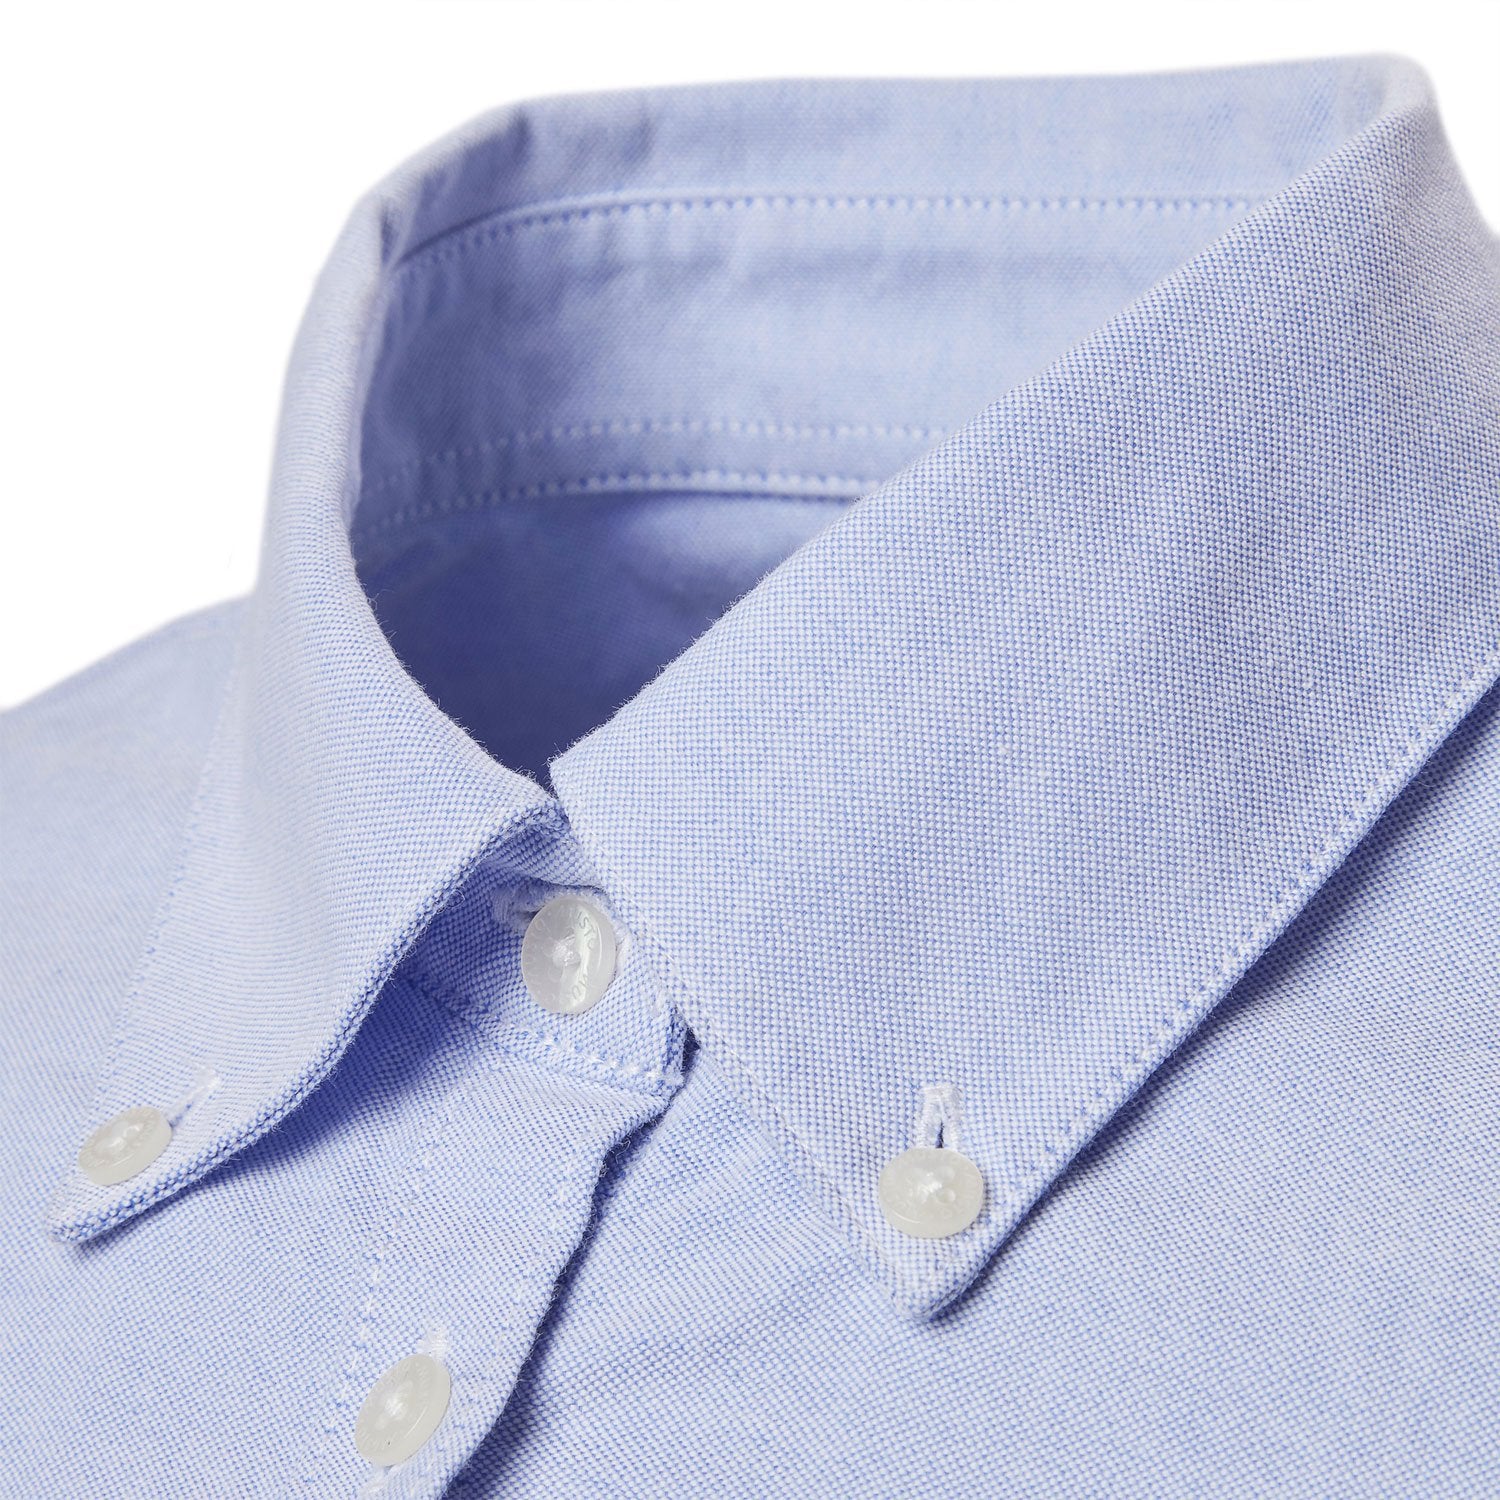 Oxford shirt button down collar